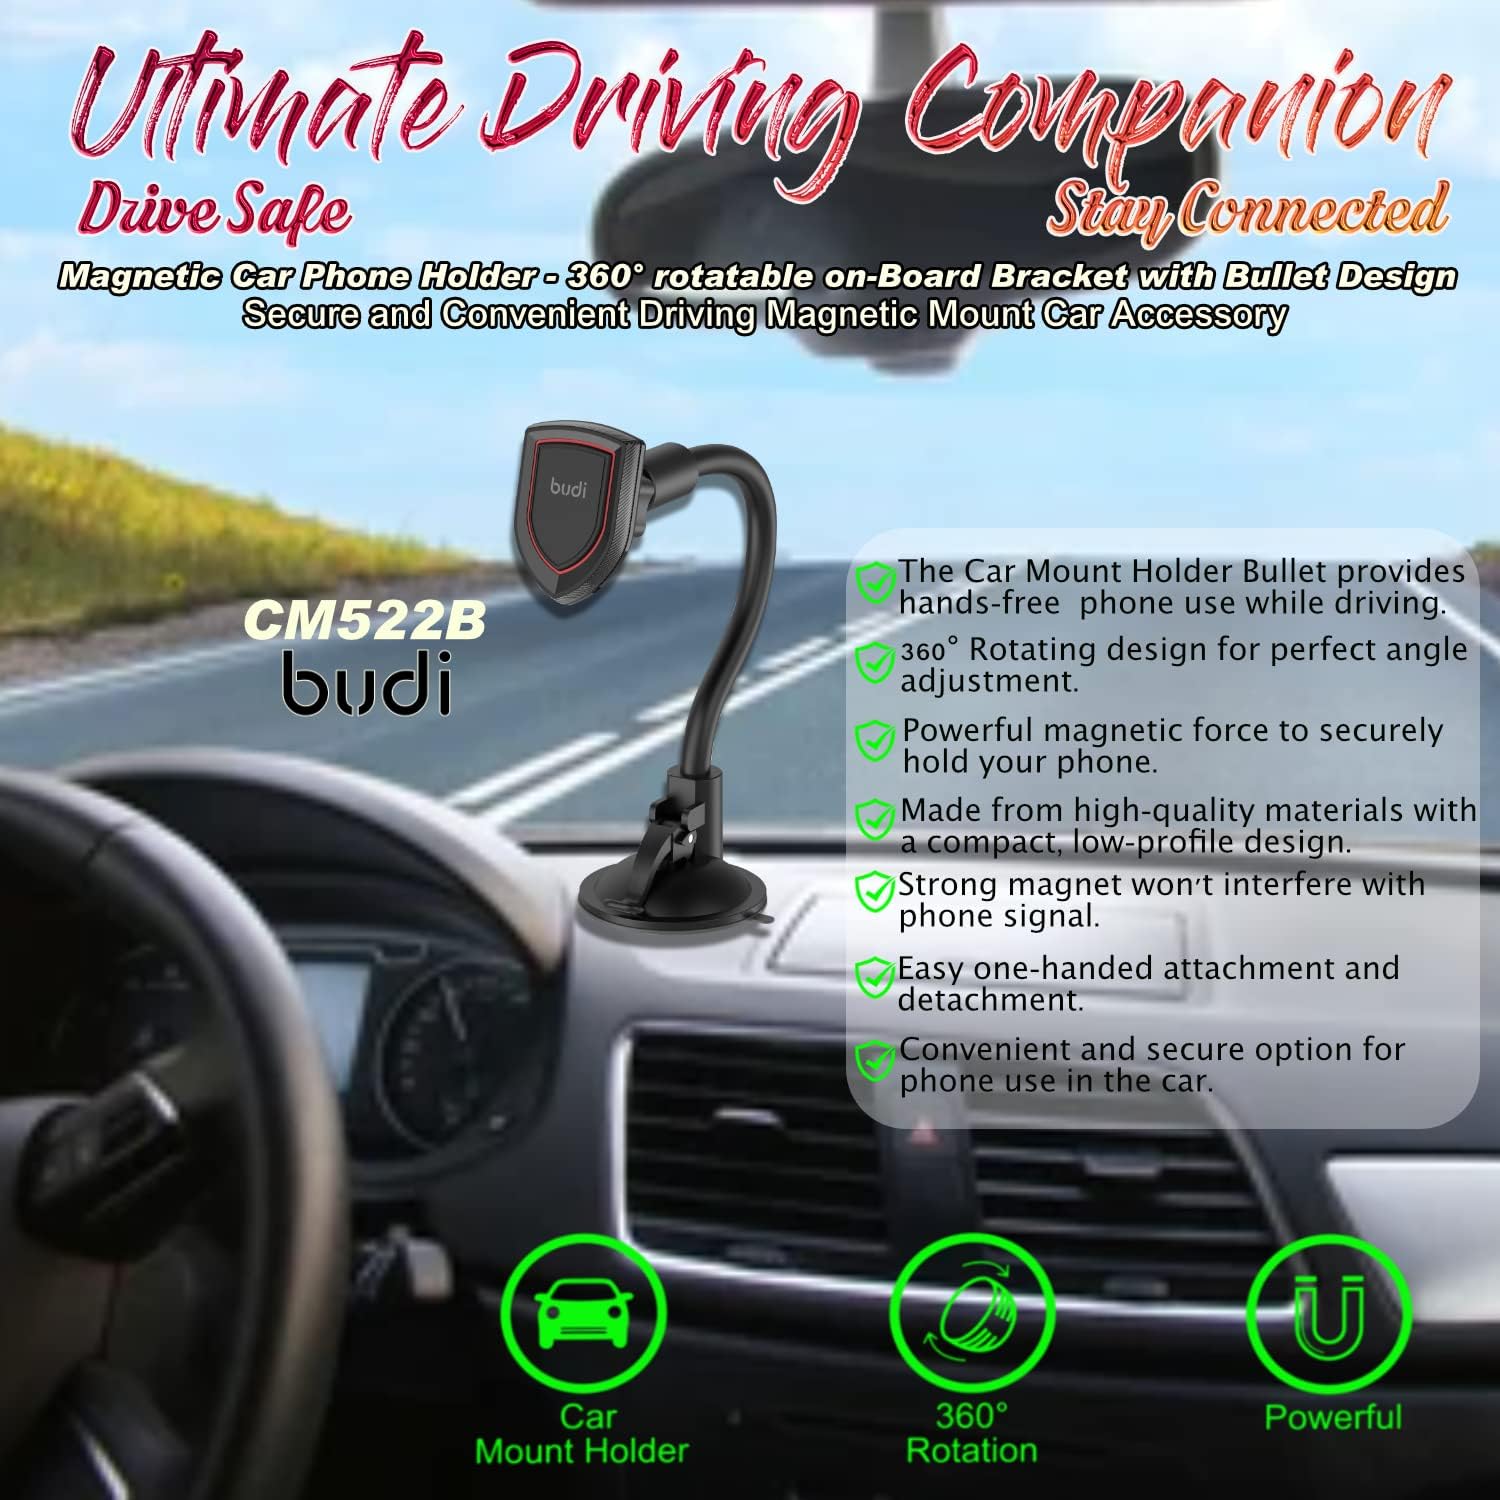 Car Phone Mount, MagSafe Car Phone Holder, Phone Mount for Car Dashboard/Windshield